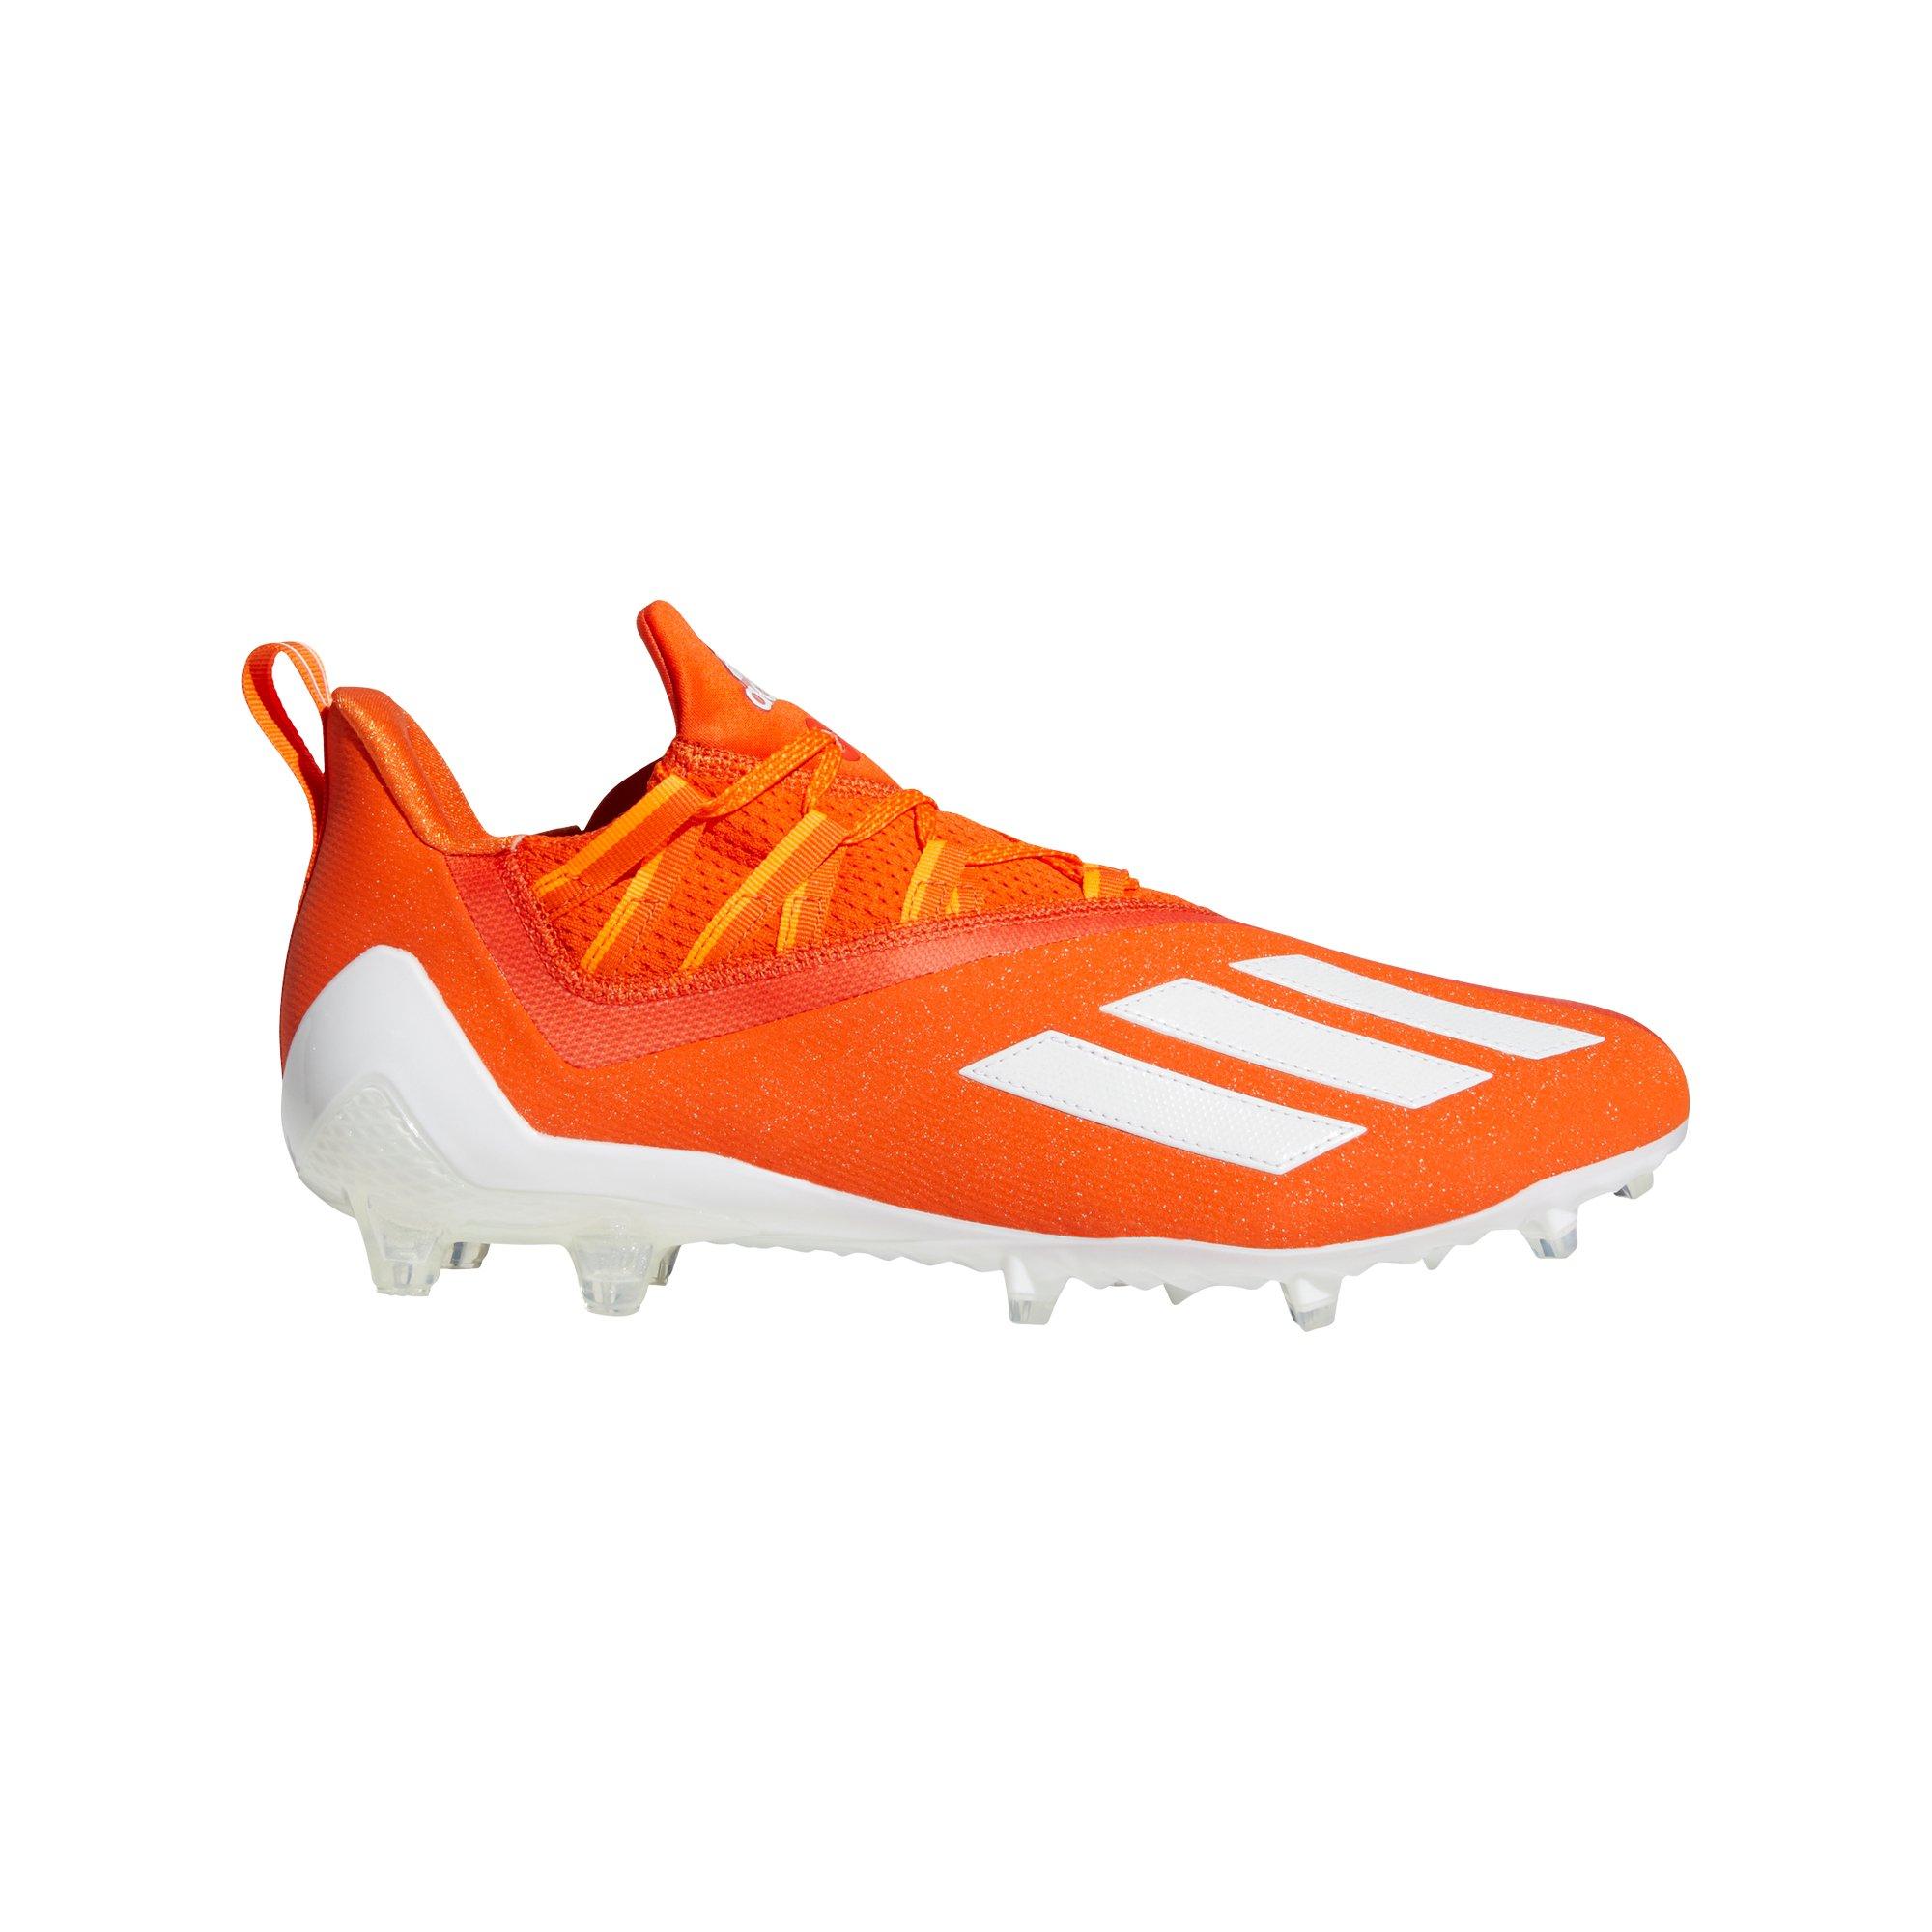 orange and white adidas football cleats